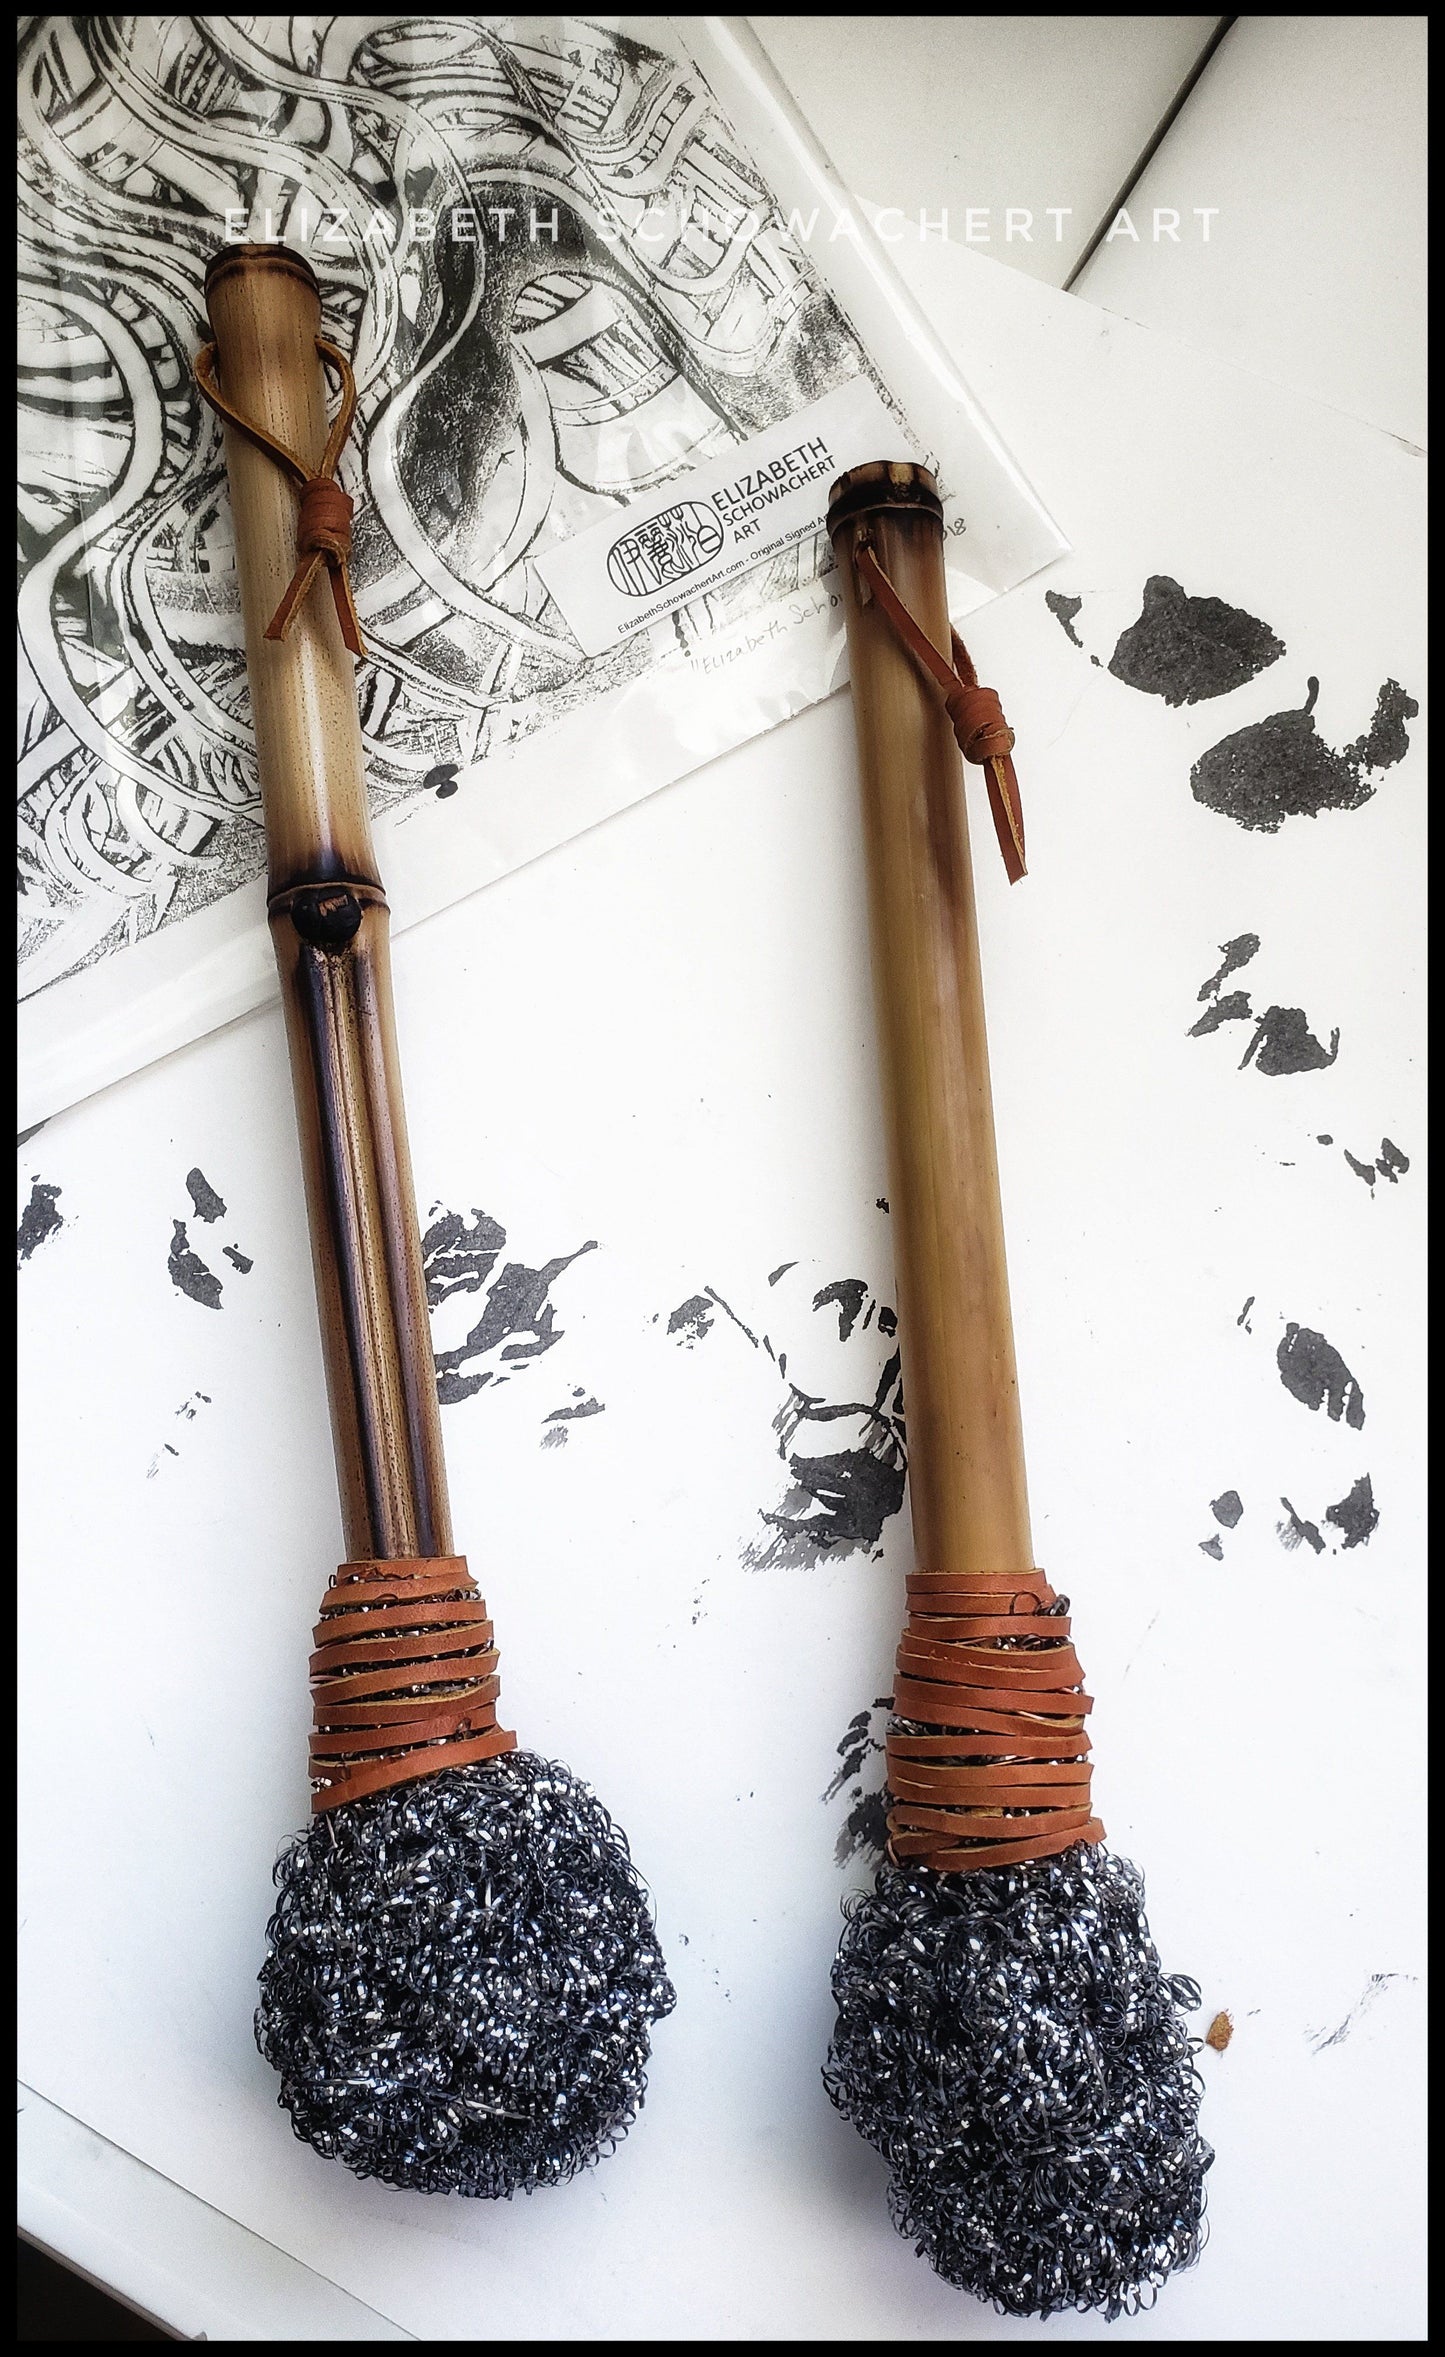 Handmade Metal Head Brushes With Hardwood or Bamboo Handles - Elizabeth Schowachert Art